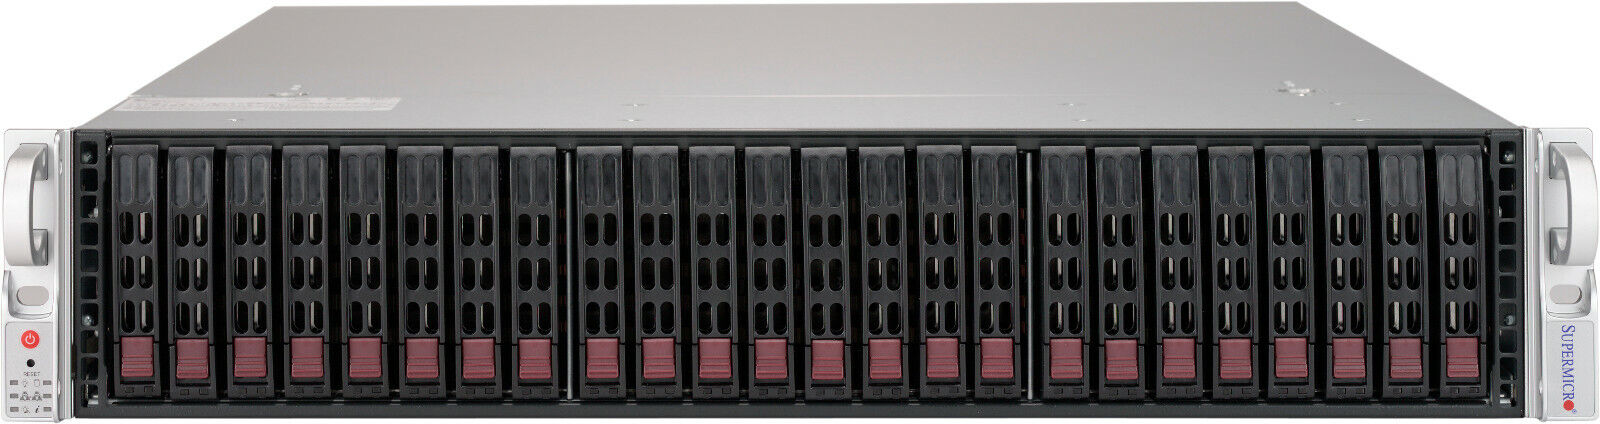 2U 24 Bay SFF IPASS TRUNAS Server X9DRI-LN4F+ 2x Xeon E5-2670 V2 32GB 3x 9210